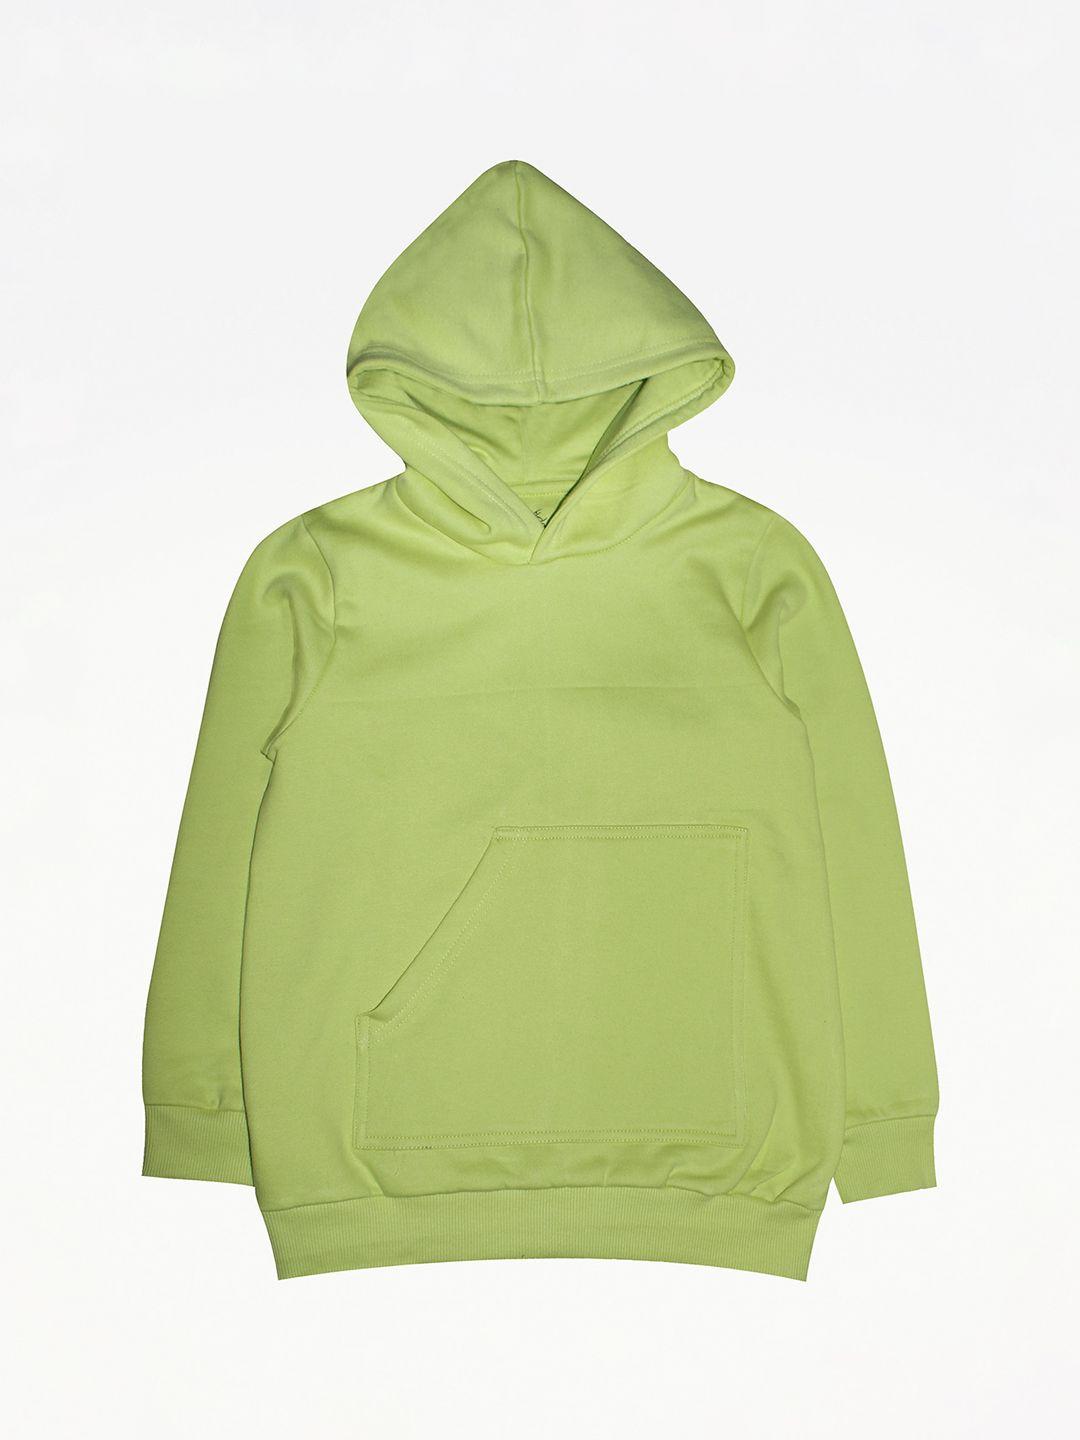 kiddopanti unisex kids green hooded pure cotton sweatshirt